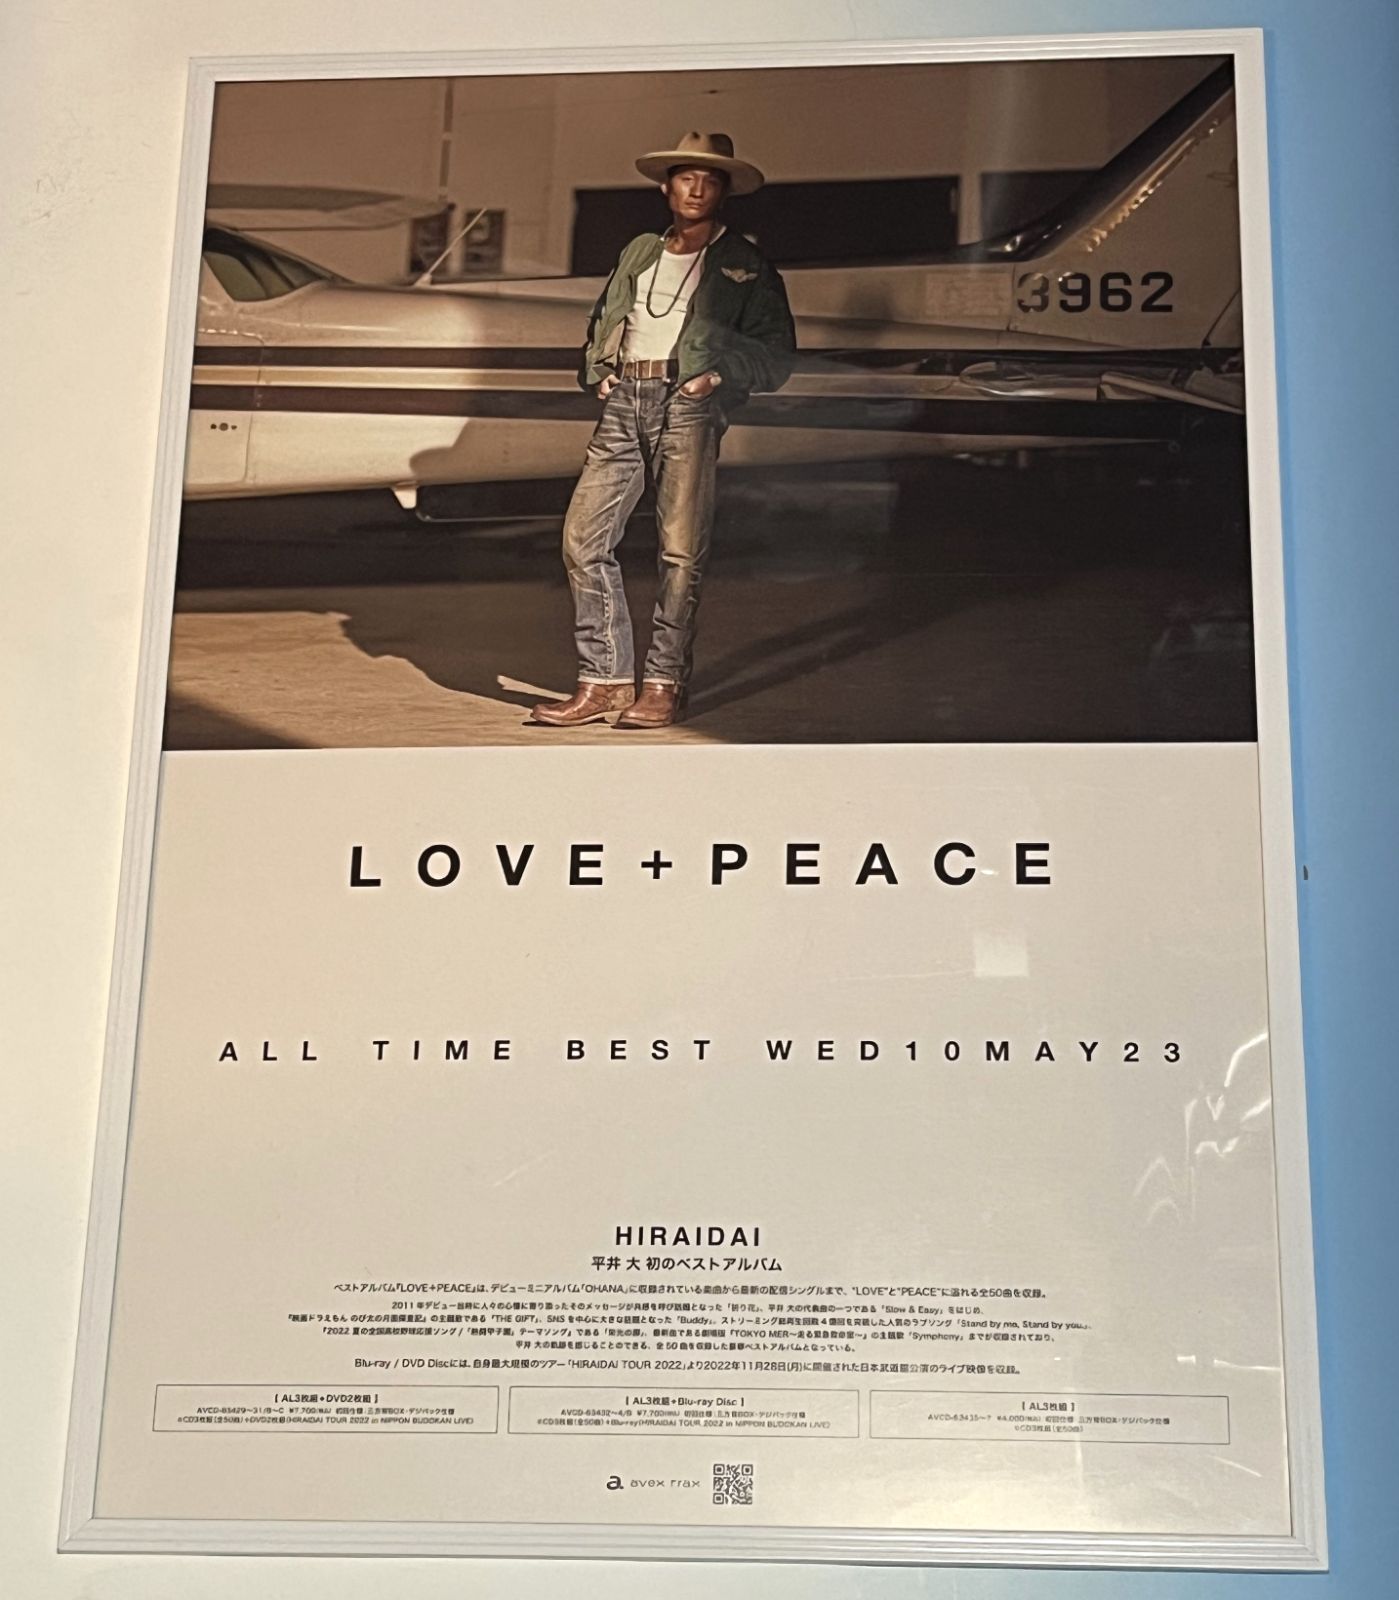 LOVE + PEACE 平井大 販売用告知B2ポスター - メルカリ